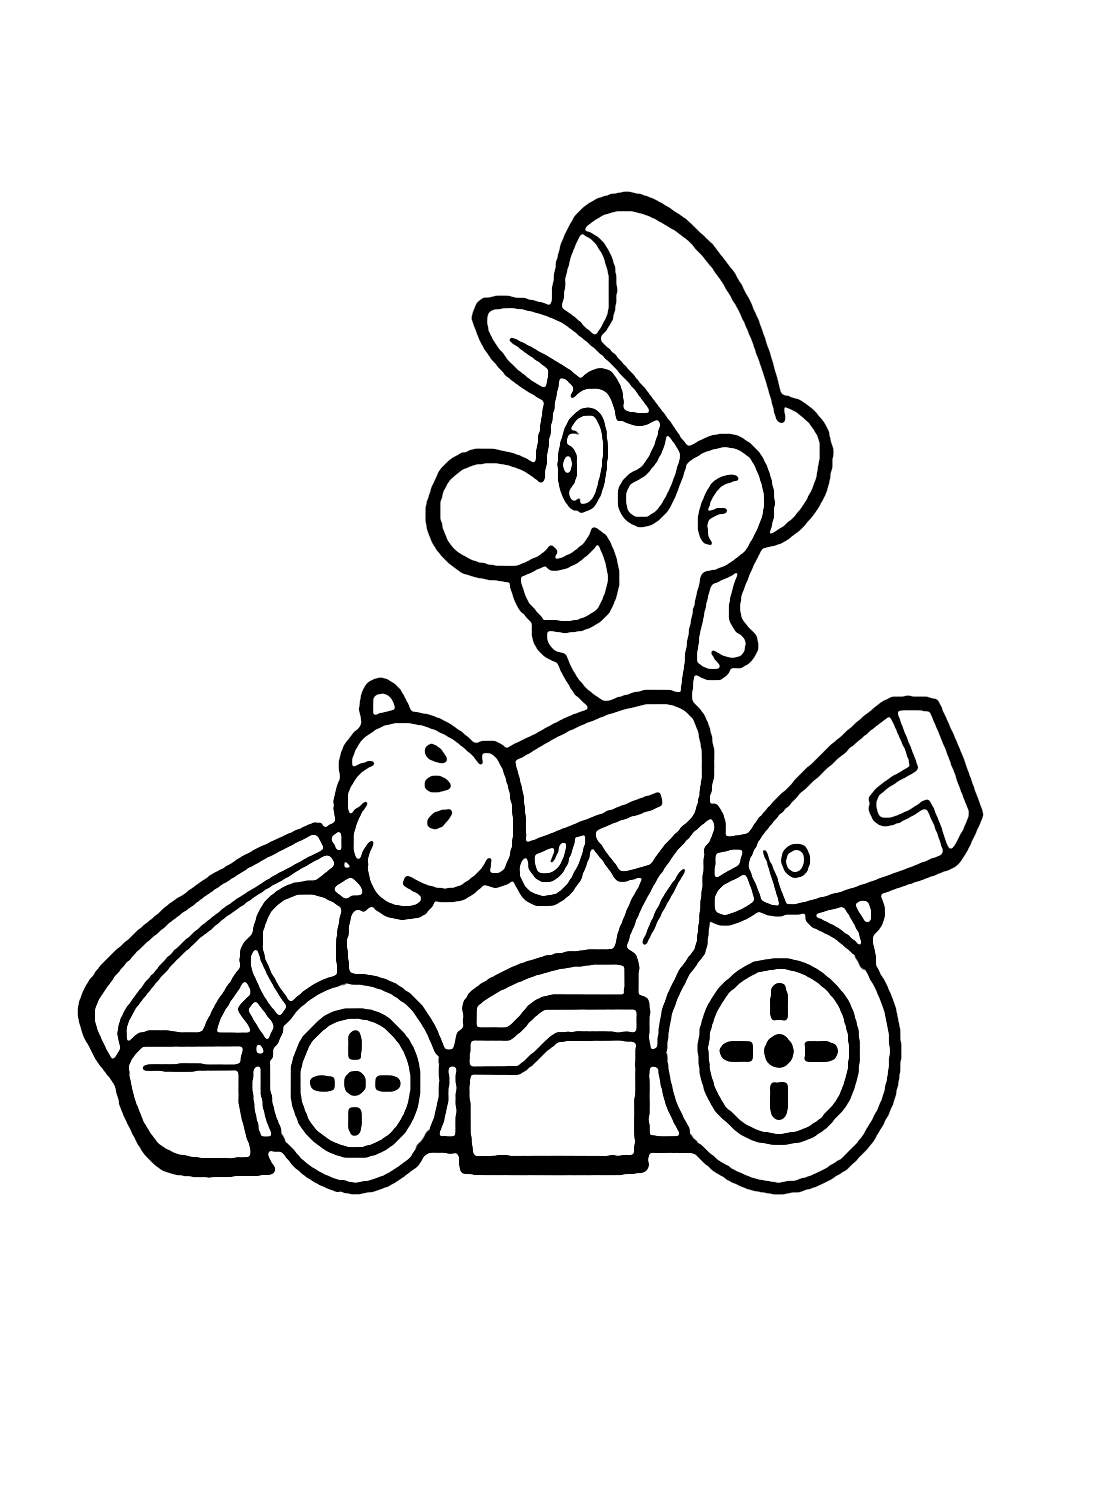 Luigi from Mario Kart Coloring Page